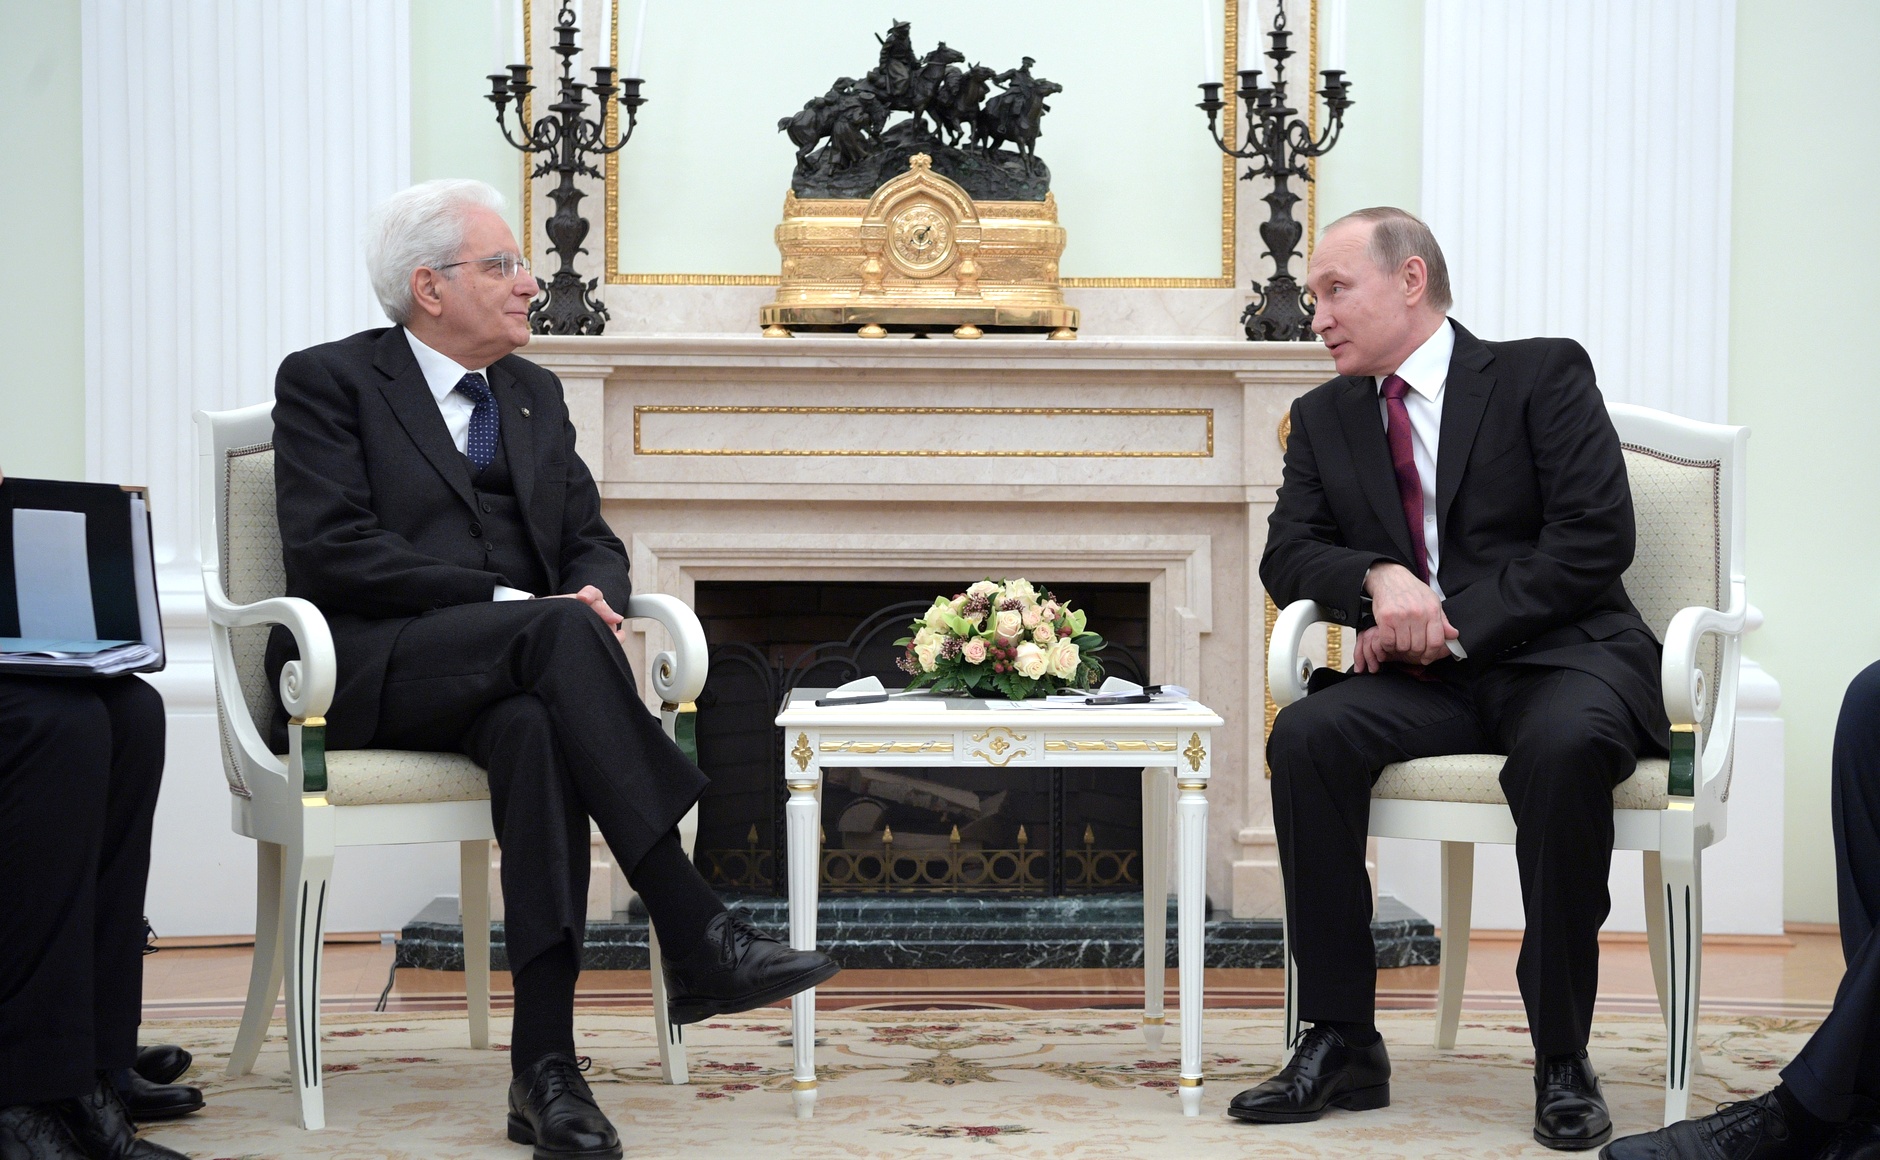 President of Italy, Sergio Mattarella, and President of Russia, Vladimir Putin